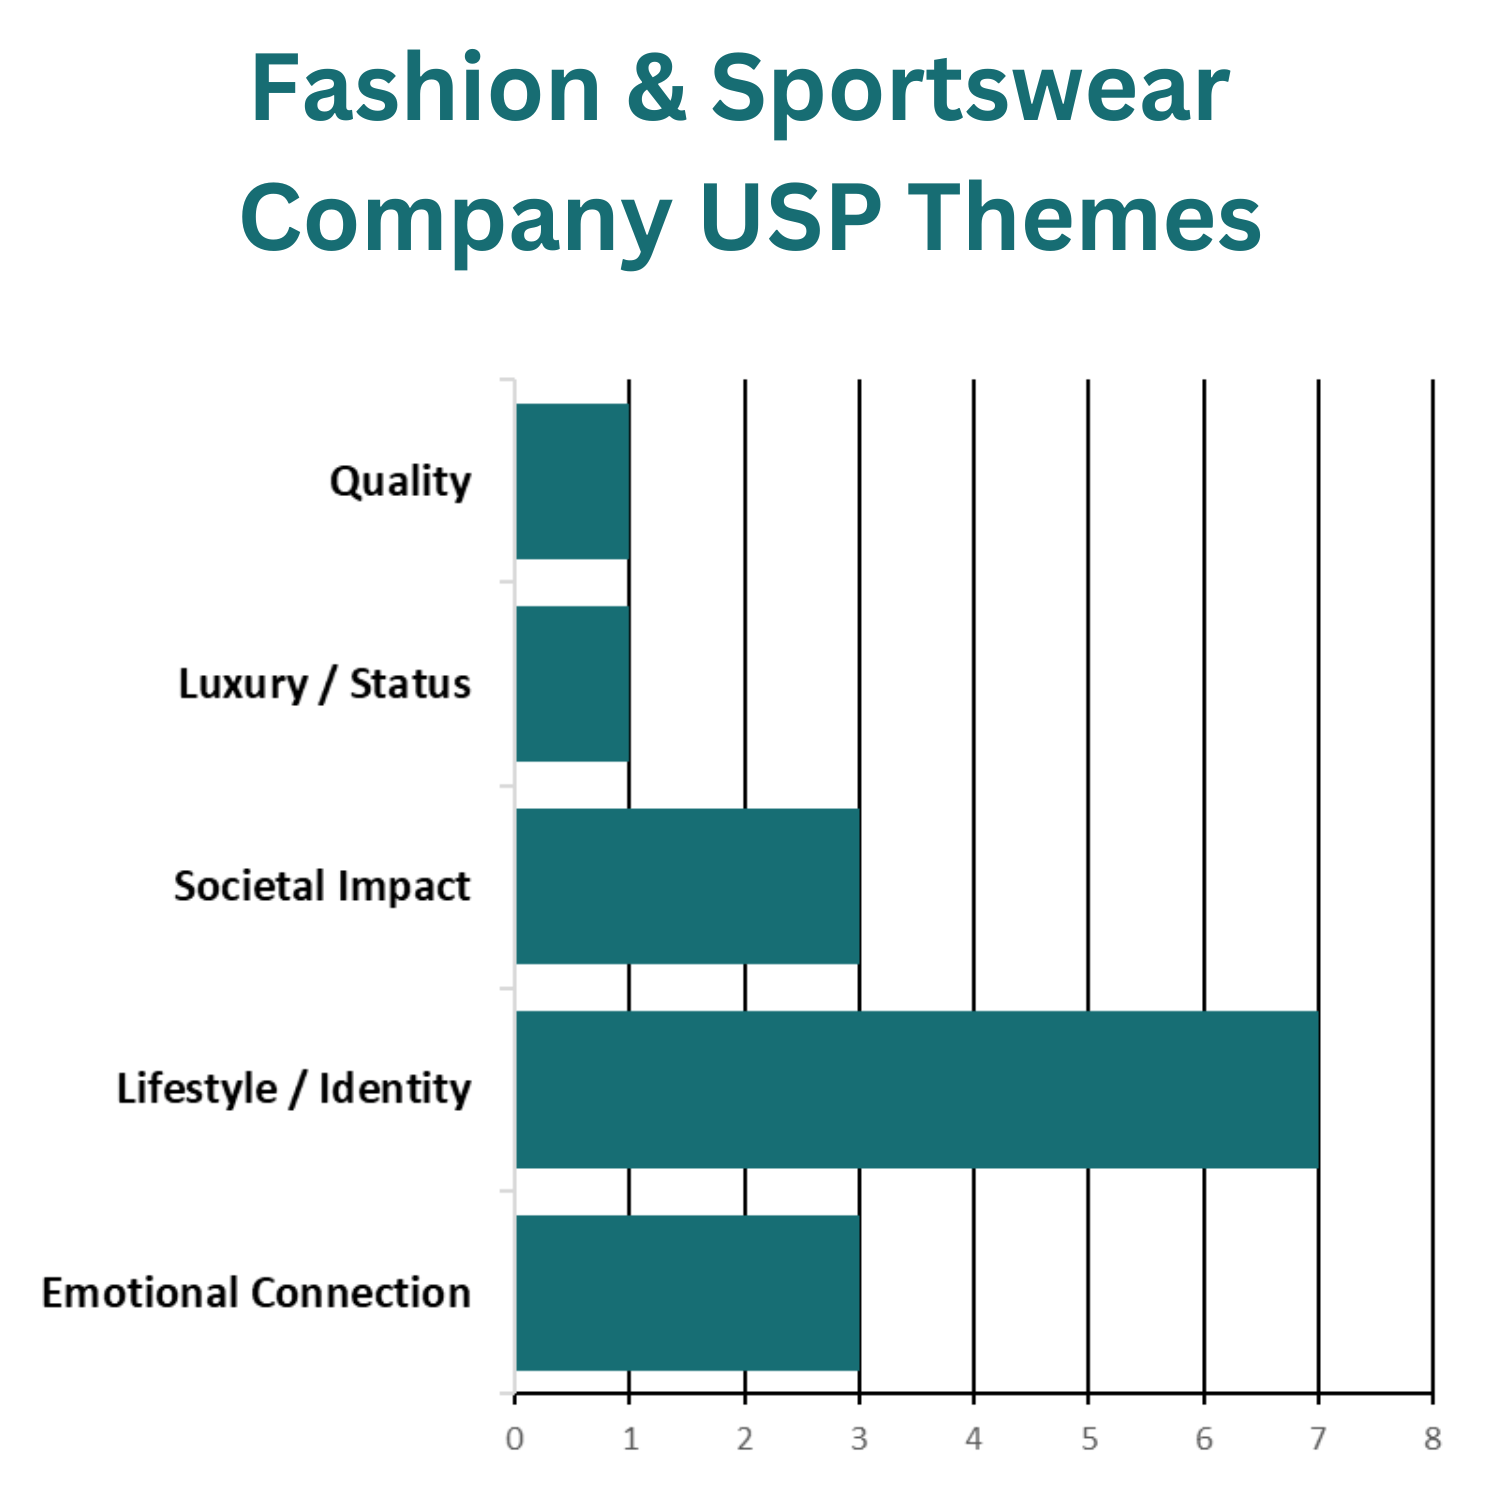 Fashion & Sportswear Company USP Themes